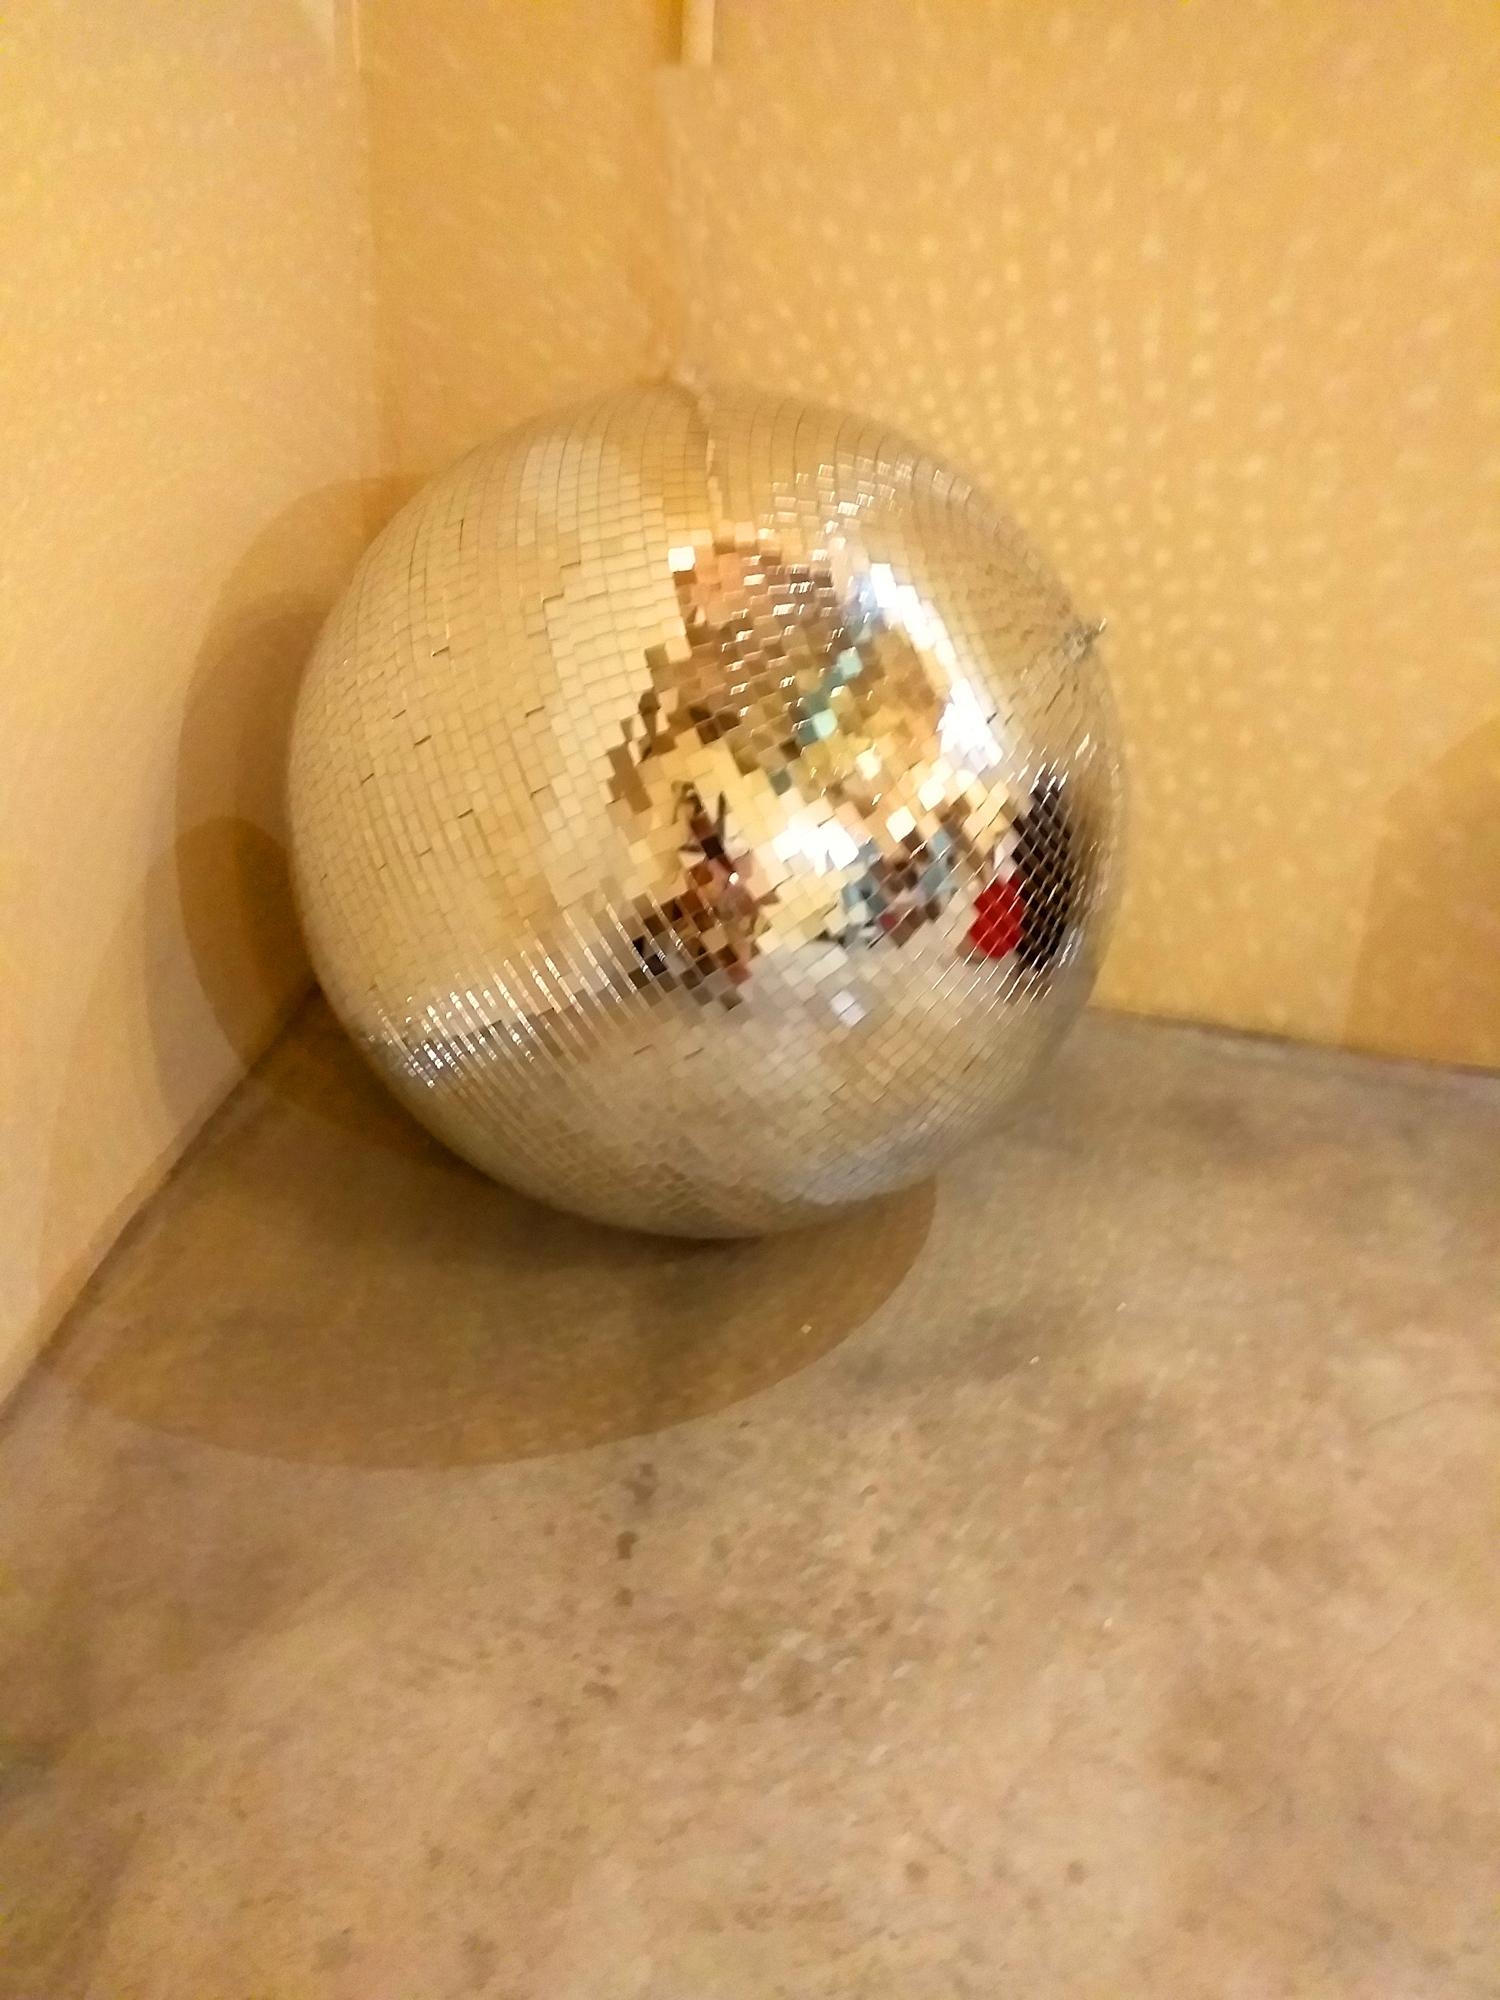 70er Discokugel - meine Lieblingsdeko im Atelier :-) #discoball #70er #atelier #zementboden